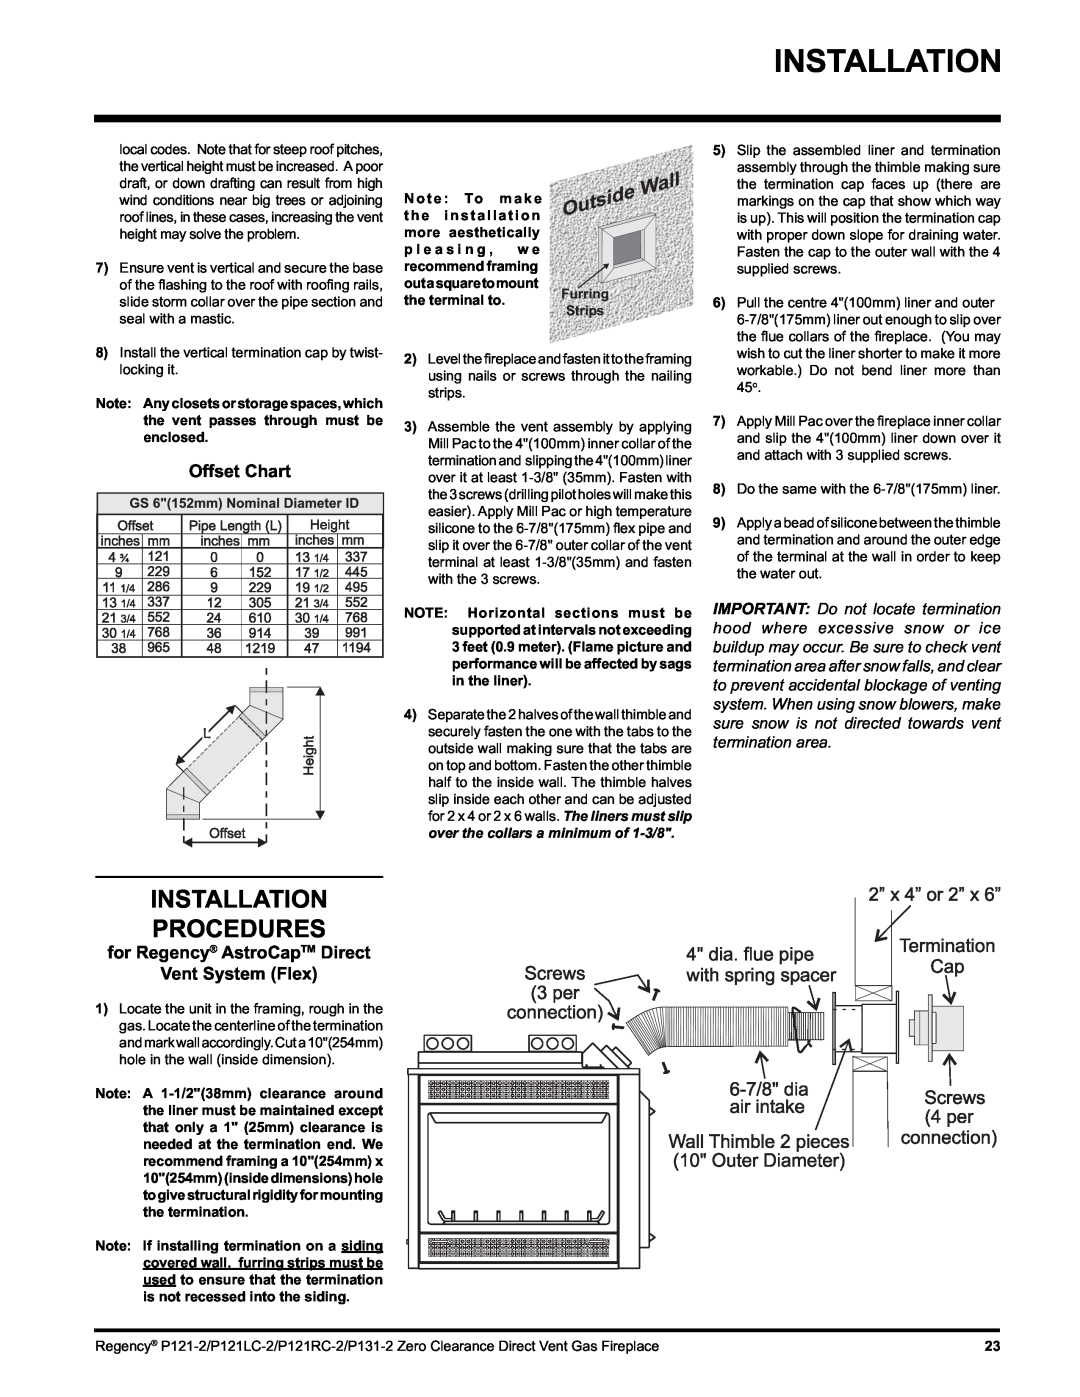 Regency P131, P121RC, P121LC Installation Procedures, Offset Chart, for Regency AstroCapTM Direct Vent System Flex 